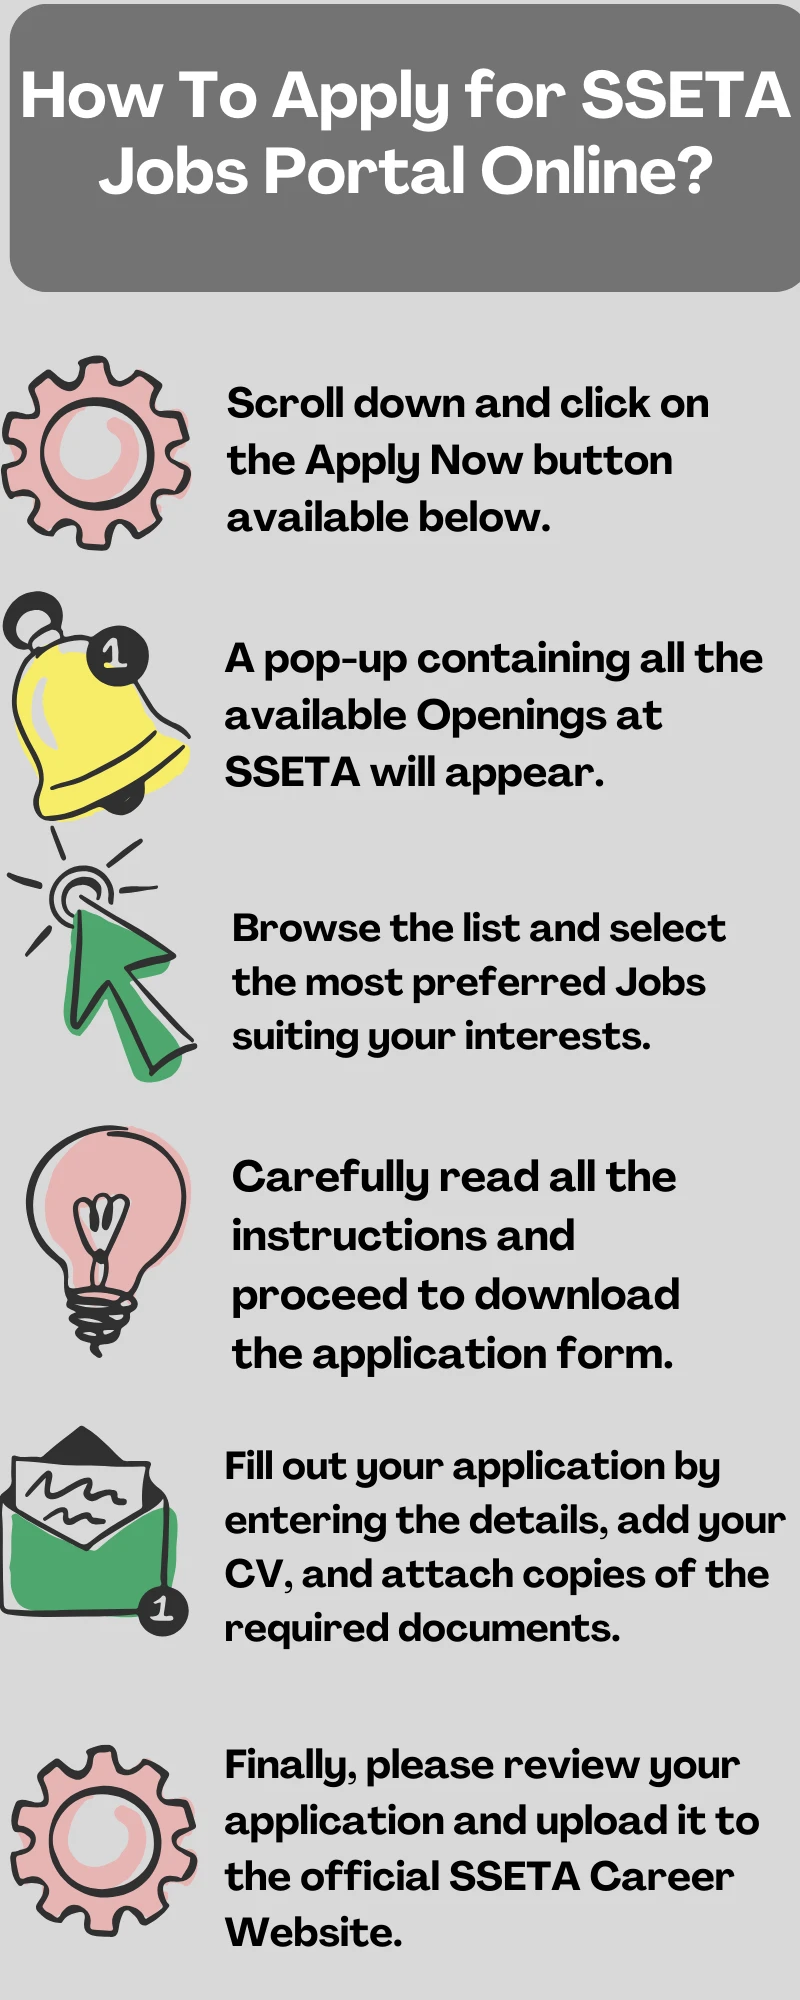 How To Apply for SSETA Jobs Portal Online?